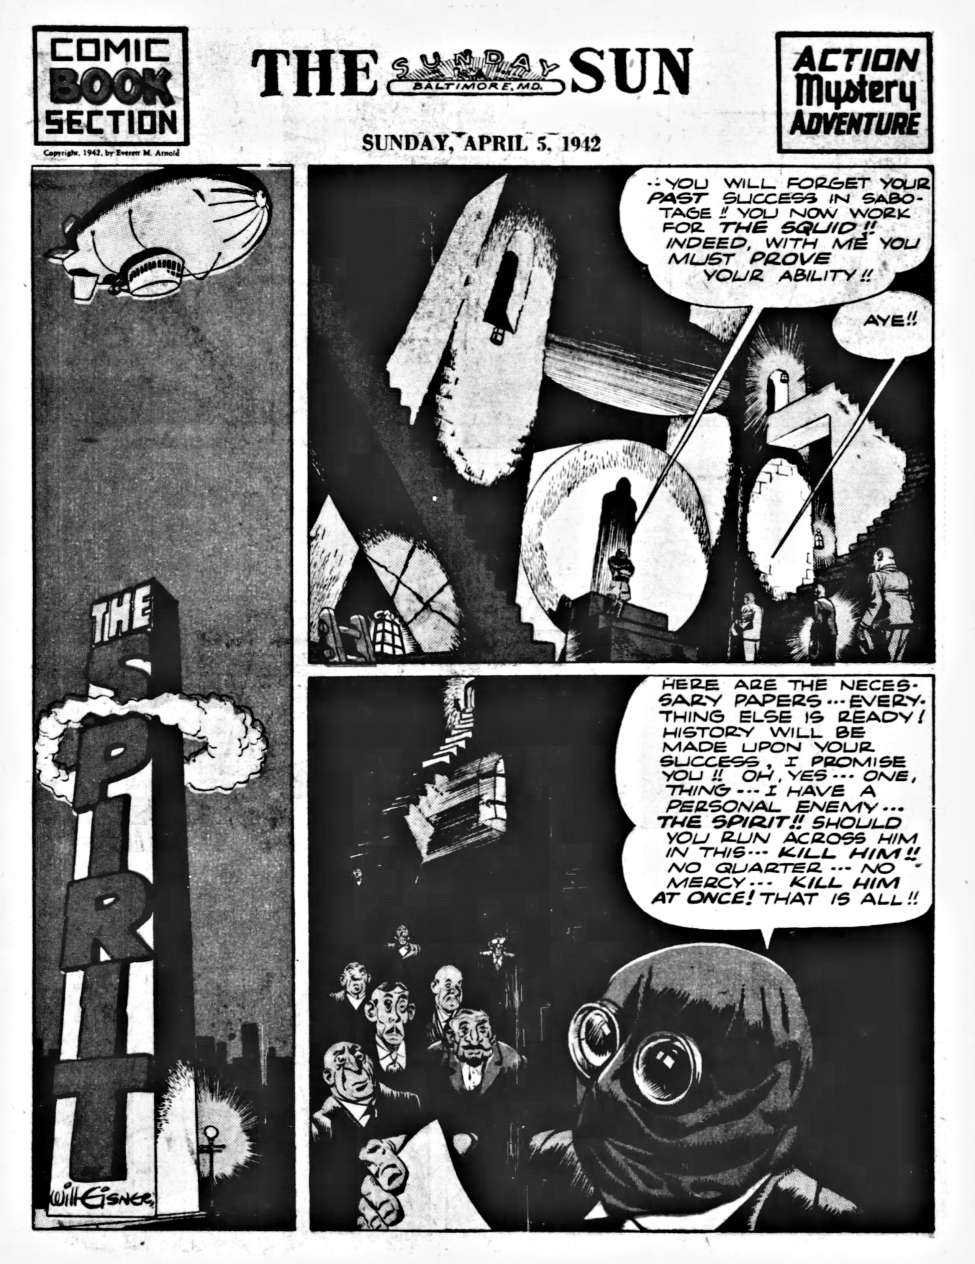 Comic Book Cover For The Spirit (1942-04-05) - Baltimore Sun (b/w)